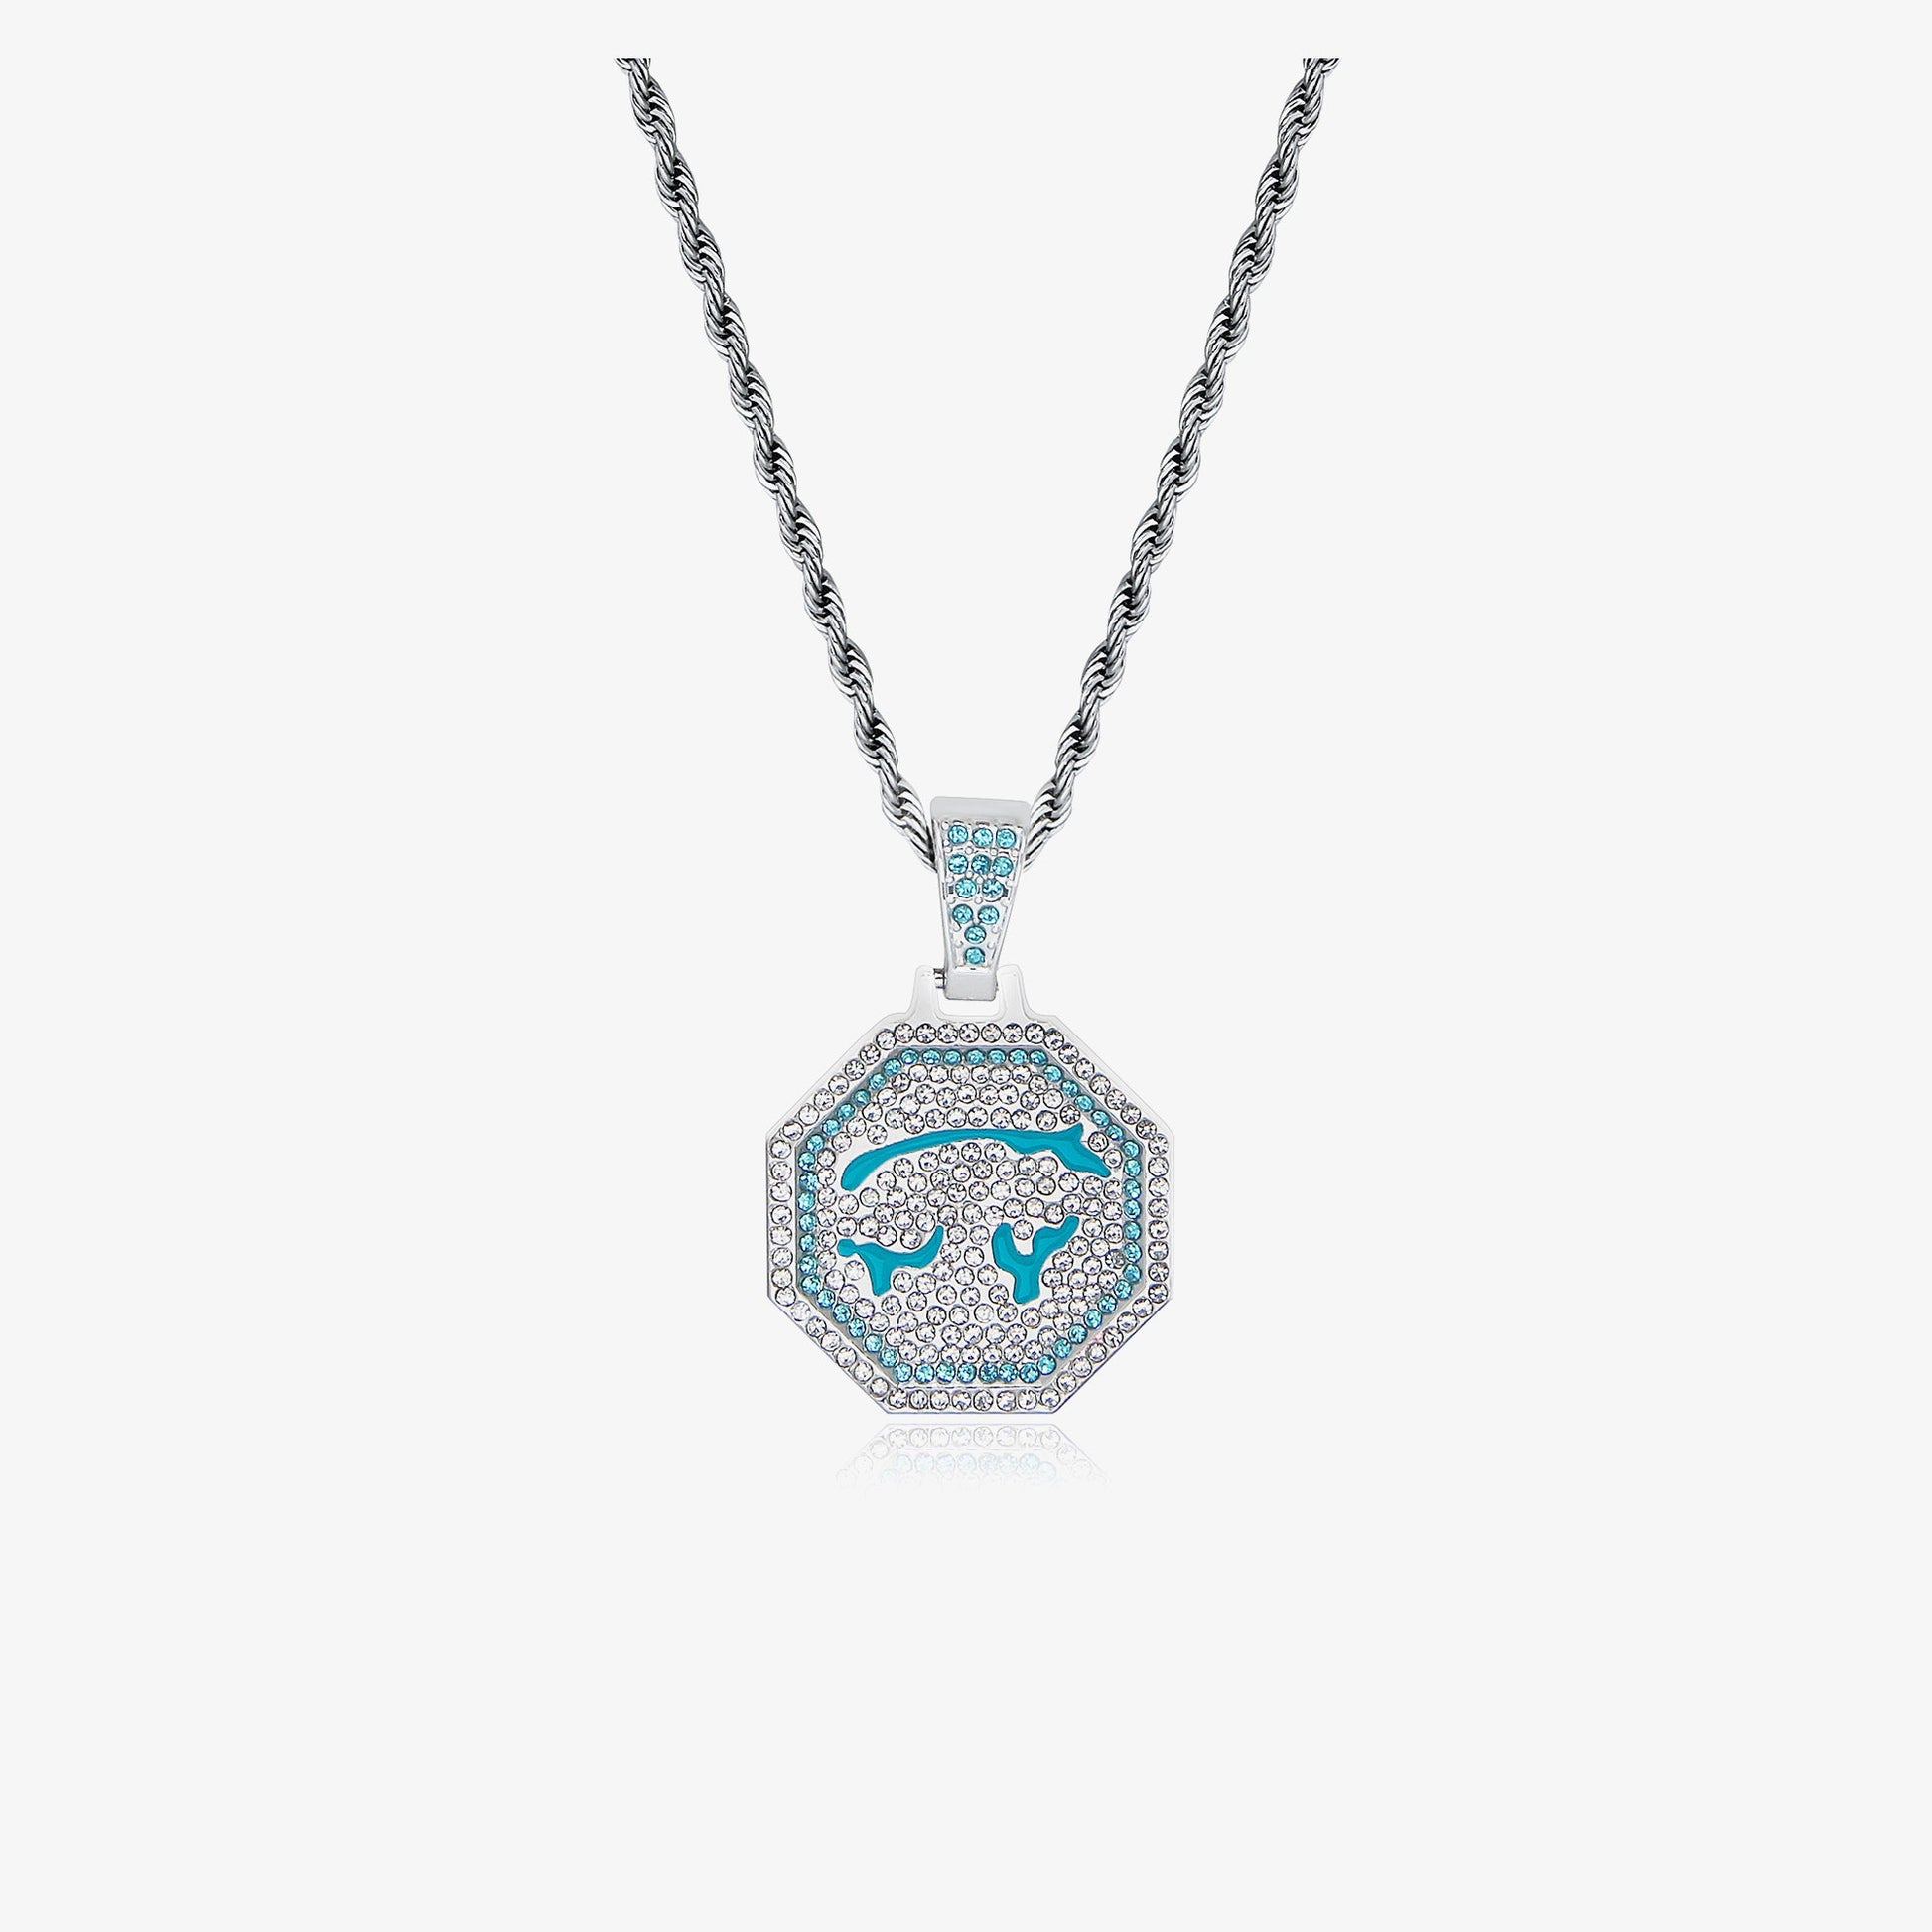 Twelve Zodiac Zodiac Men Fashionable Necklaces - NextthinkShop0CJLX174931105EV0